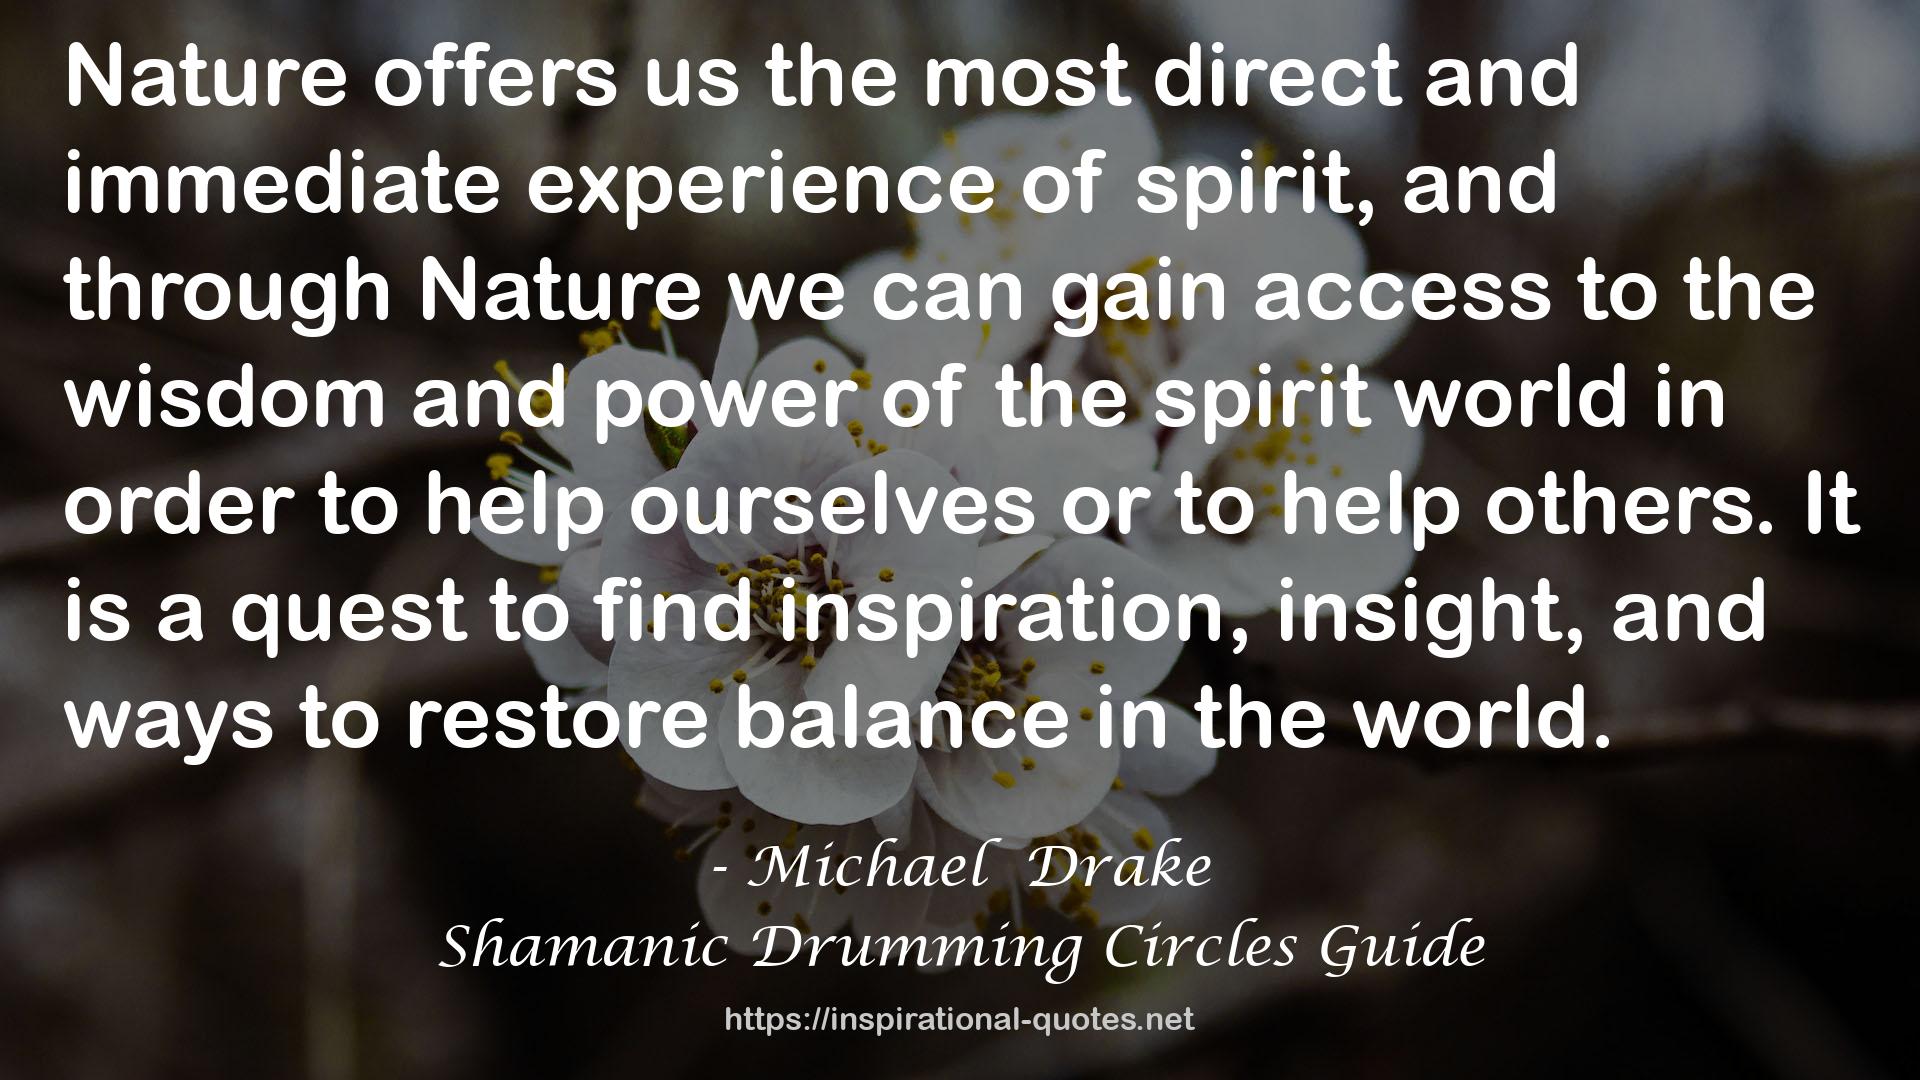 Shamanic Drumming Circles Guide QUOTES